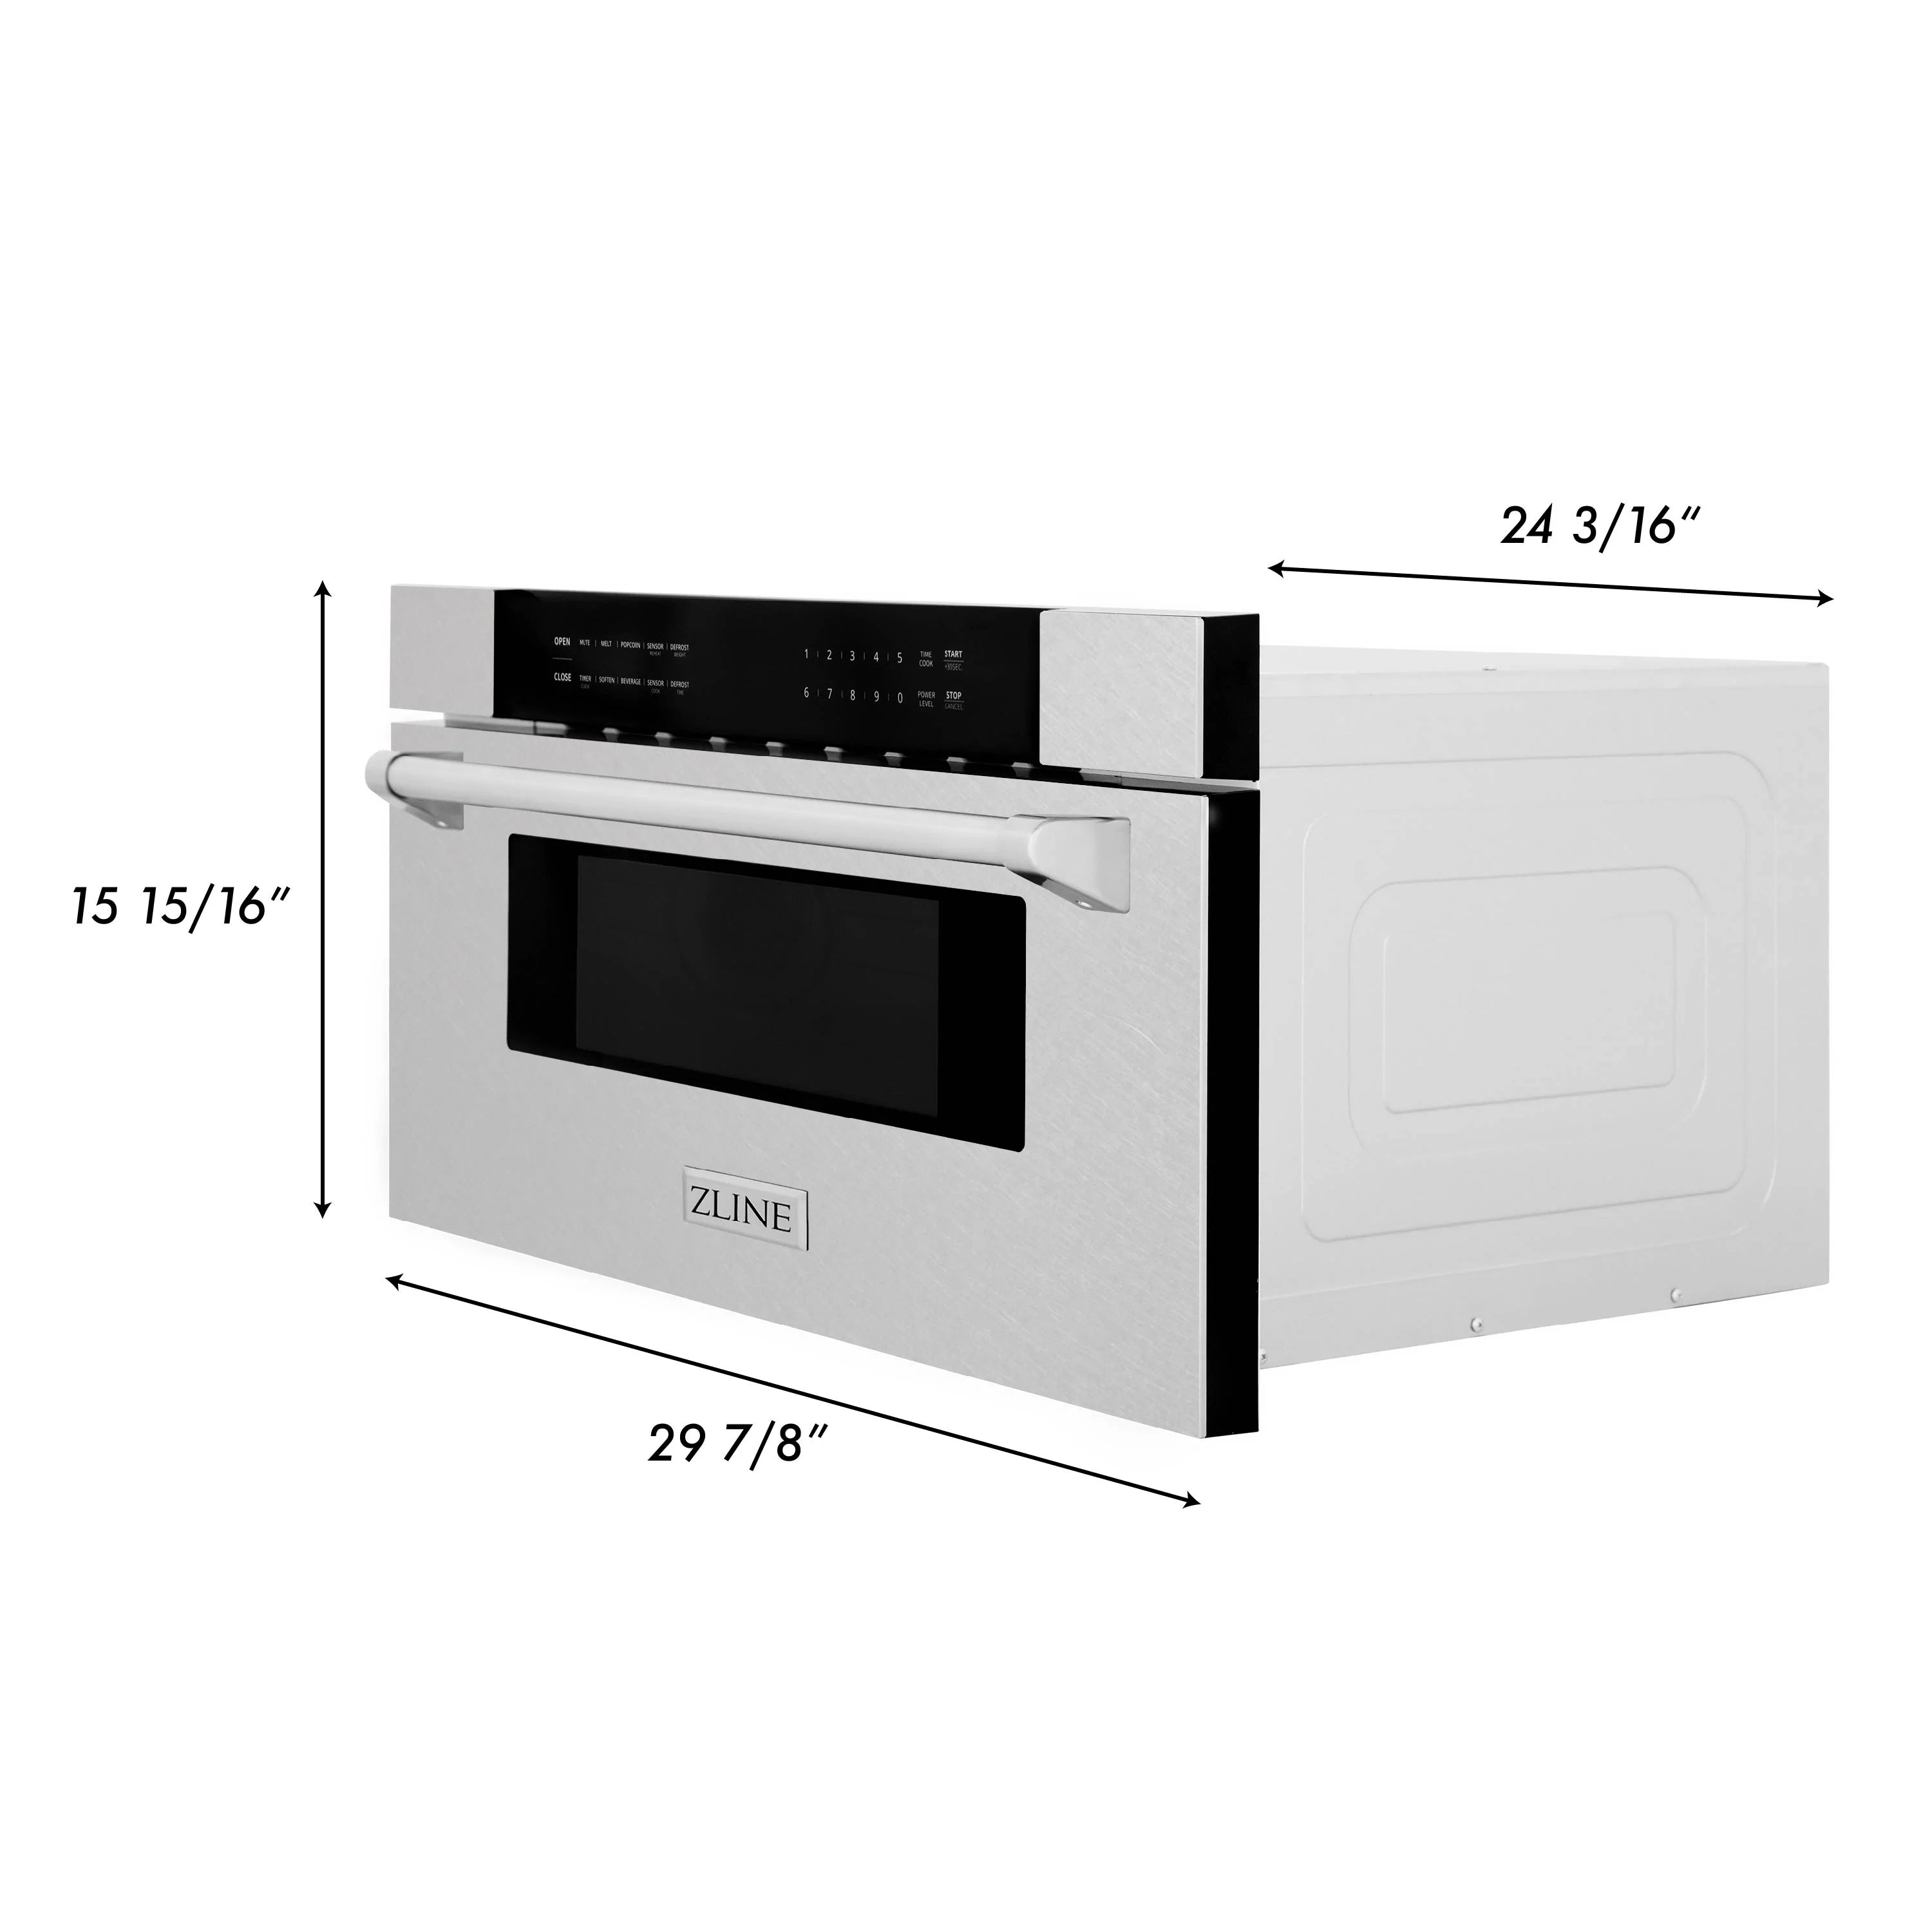 ZLINE 30" 1.2 cu. ft. Built-In Microwave Drawer in Stainless Steel - MWD-30